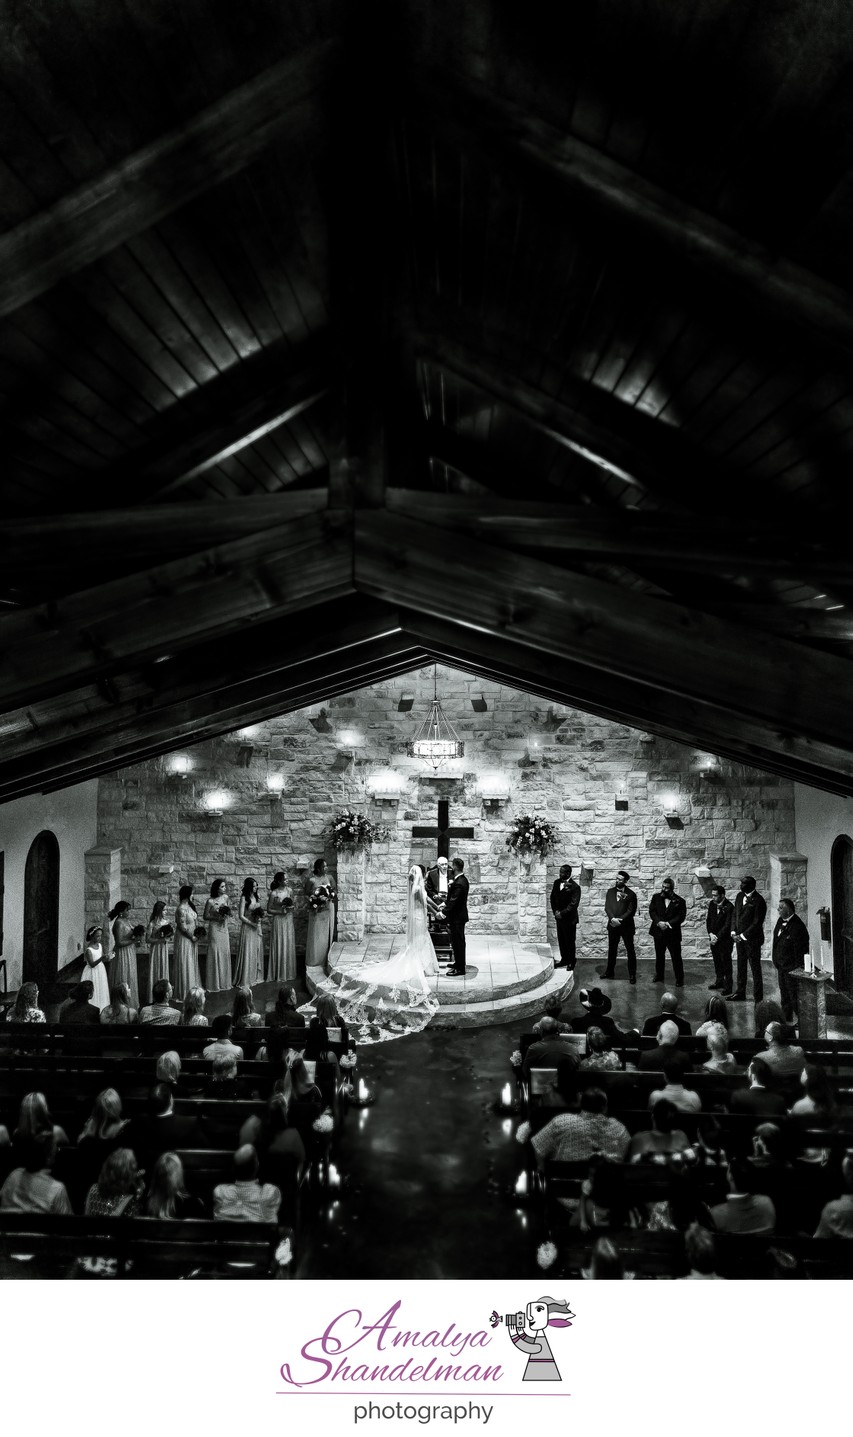 Wedding ceremony in church image